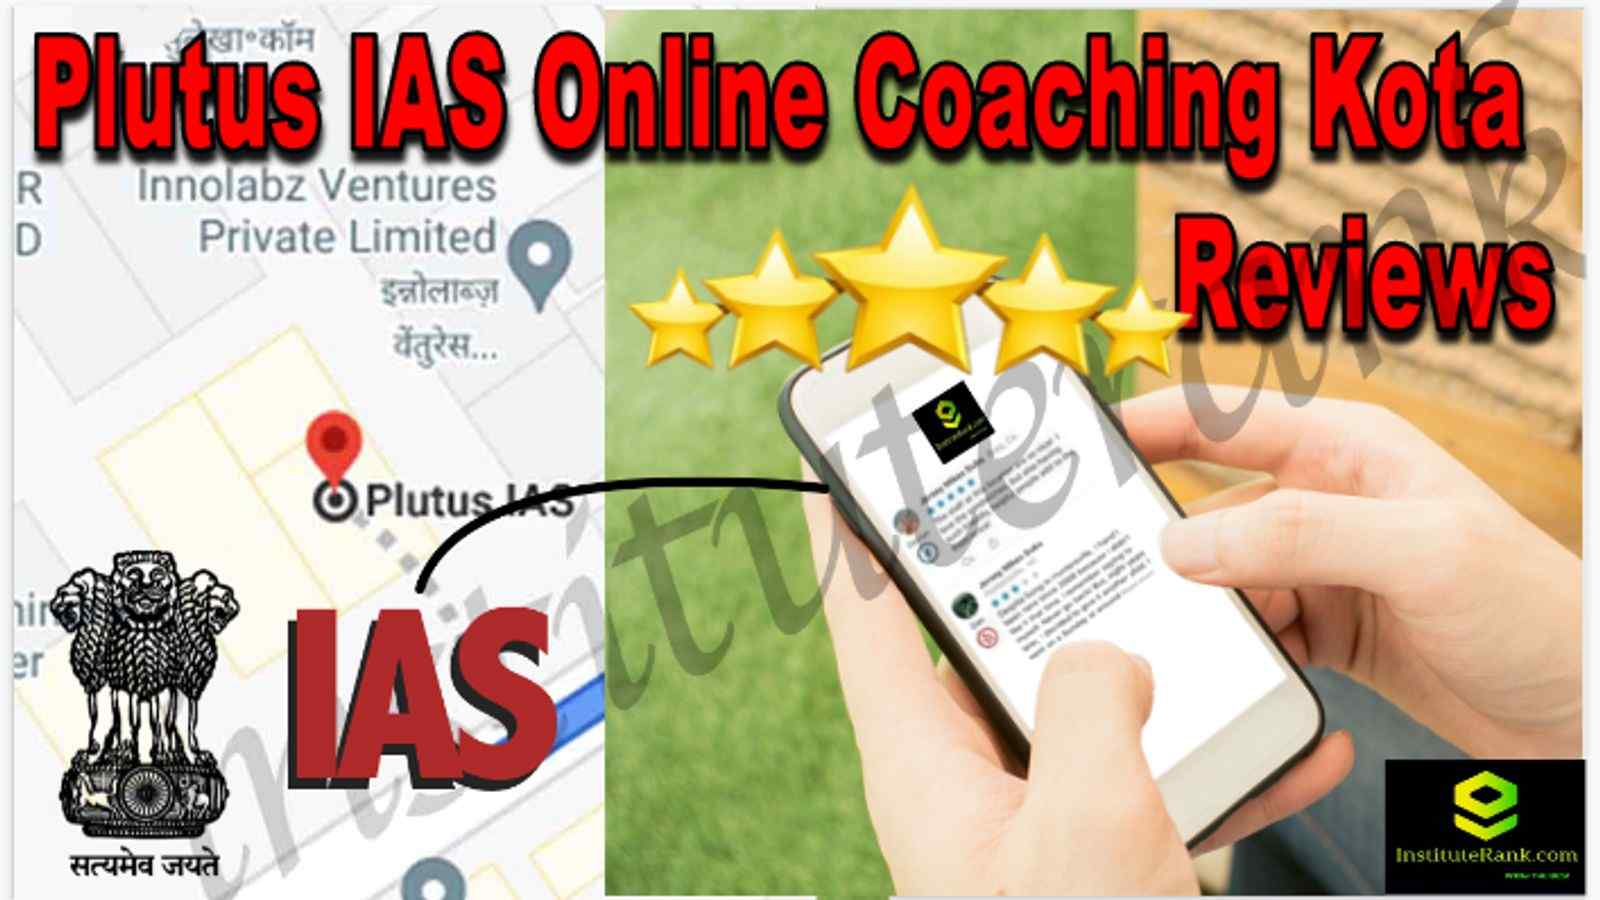 Plutus IAS Online Coaching Kota Reviews